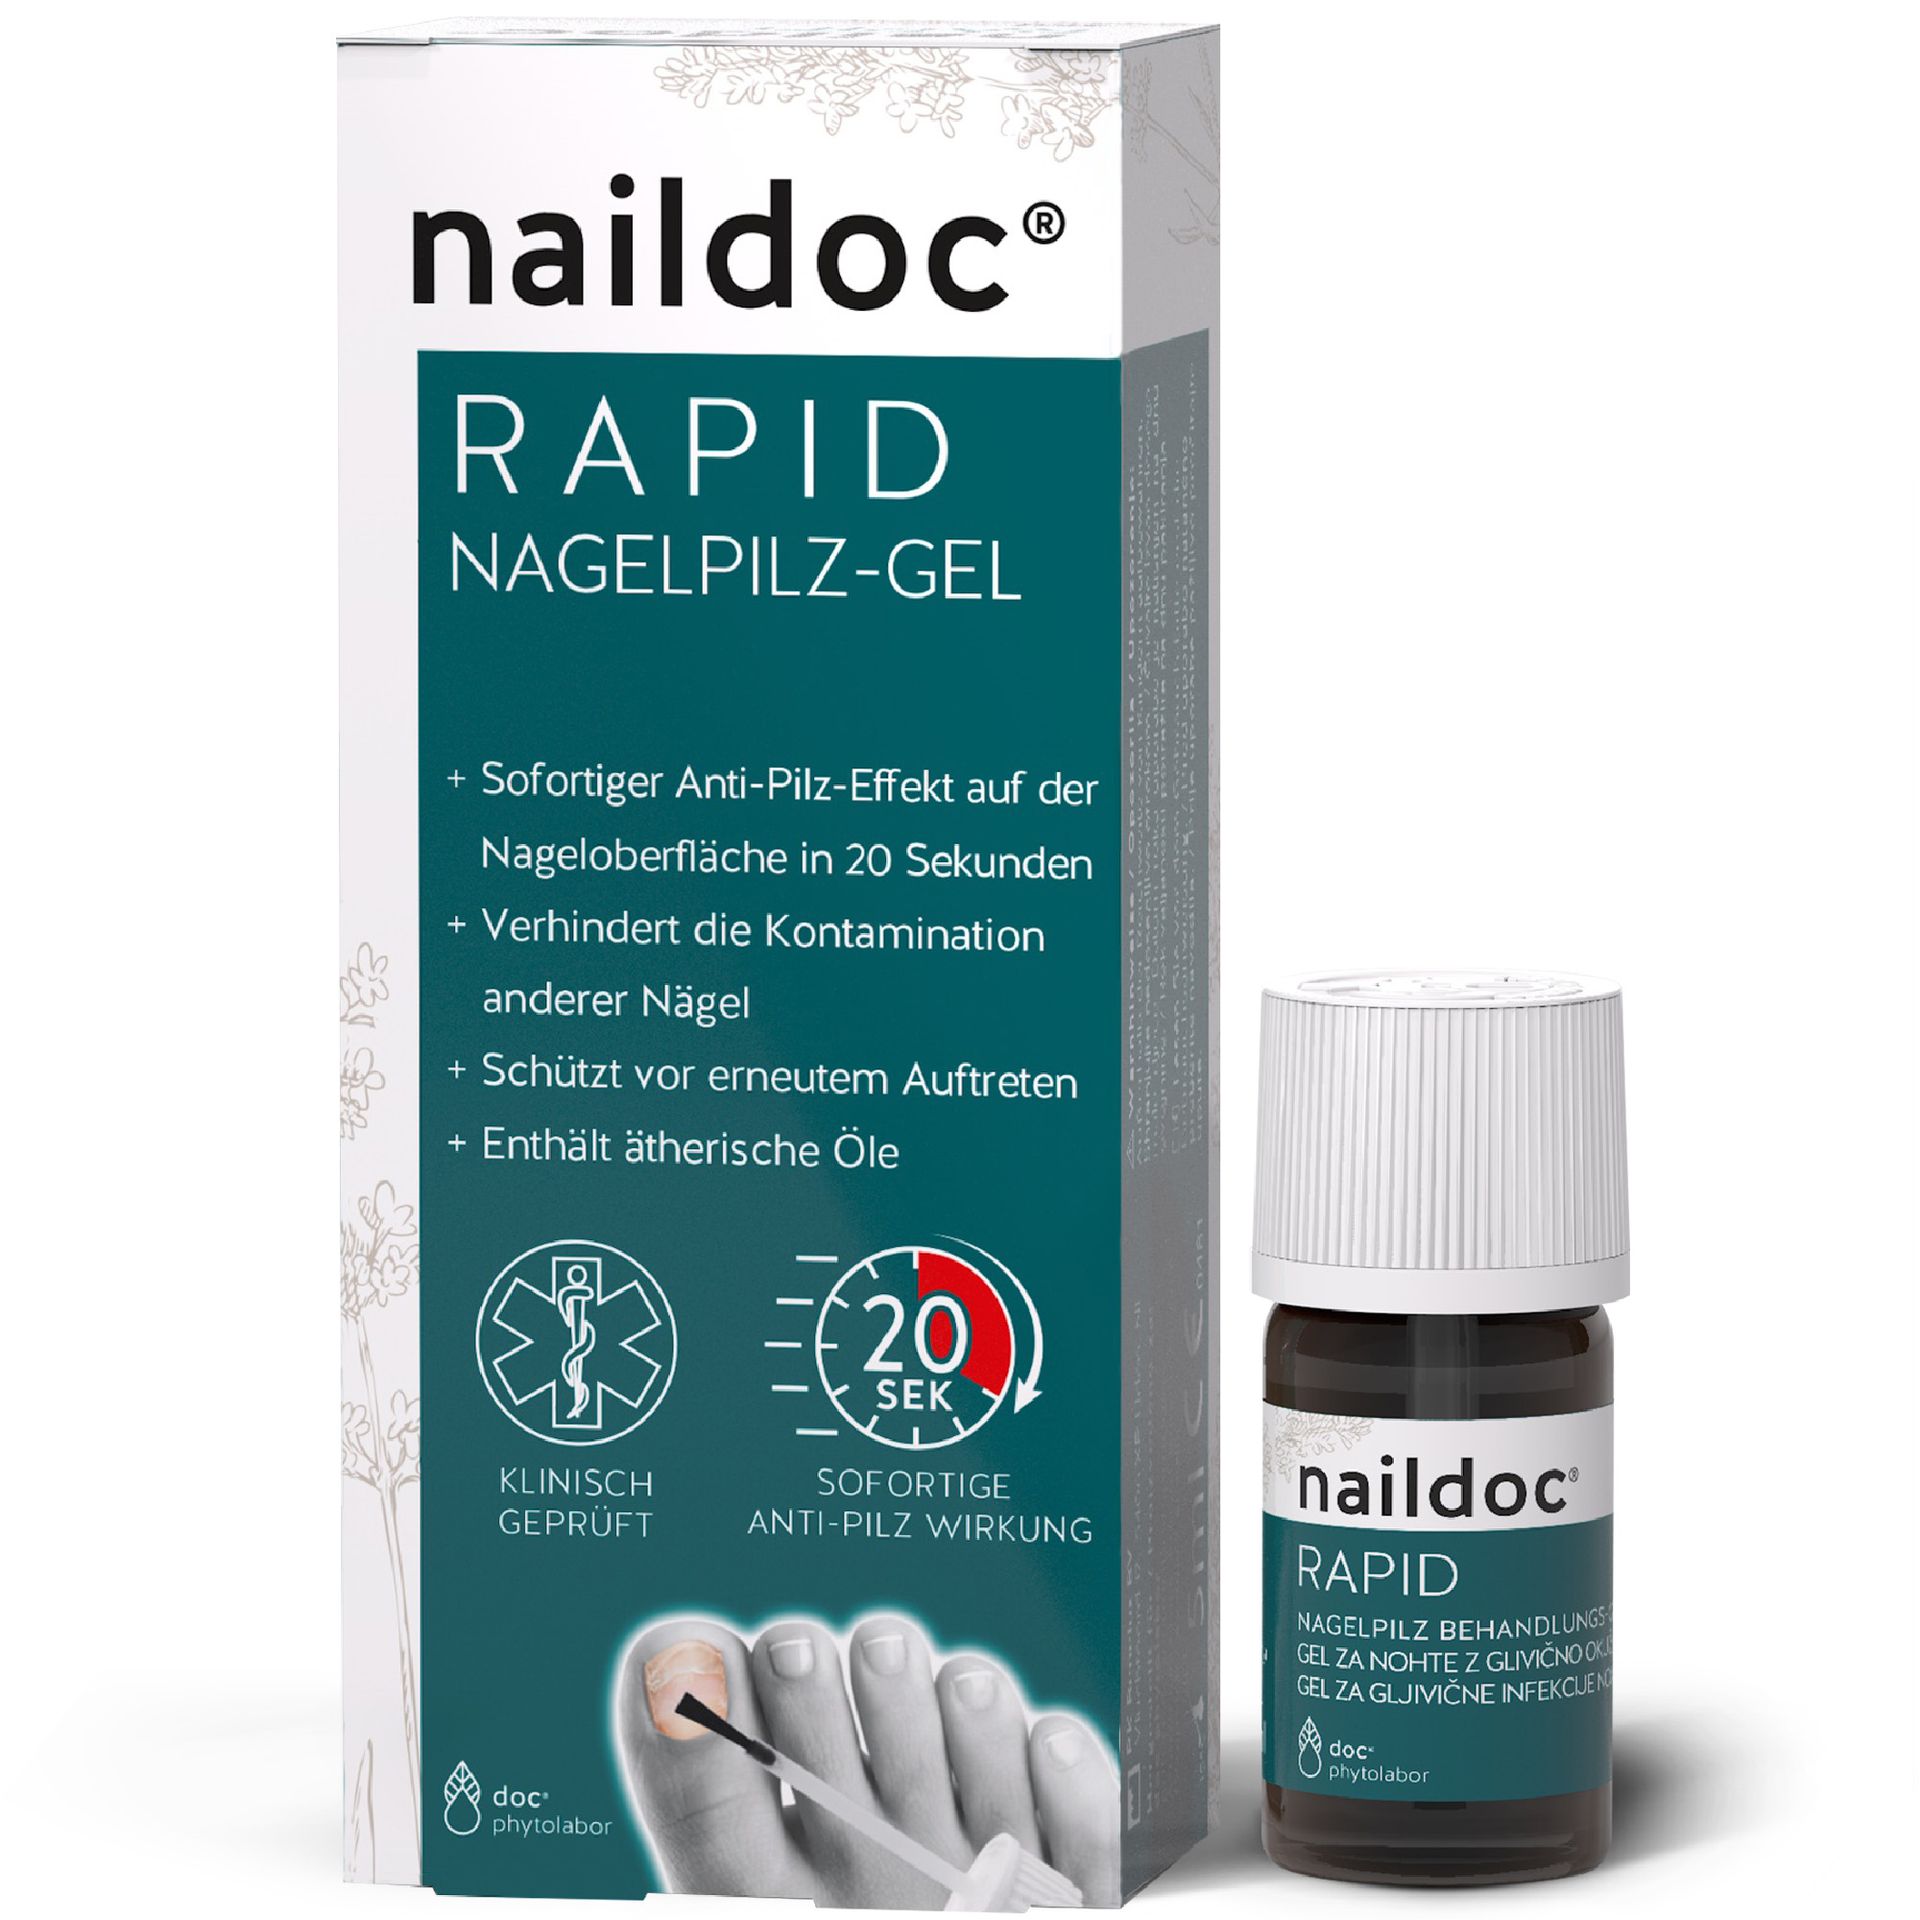 naildoc® RAPID NAGELPILZ-GEL